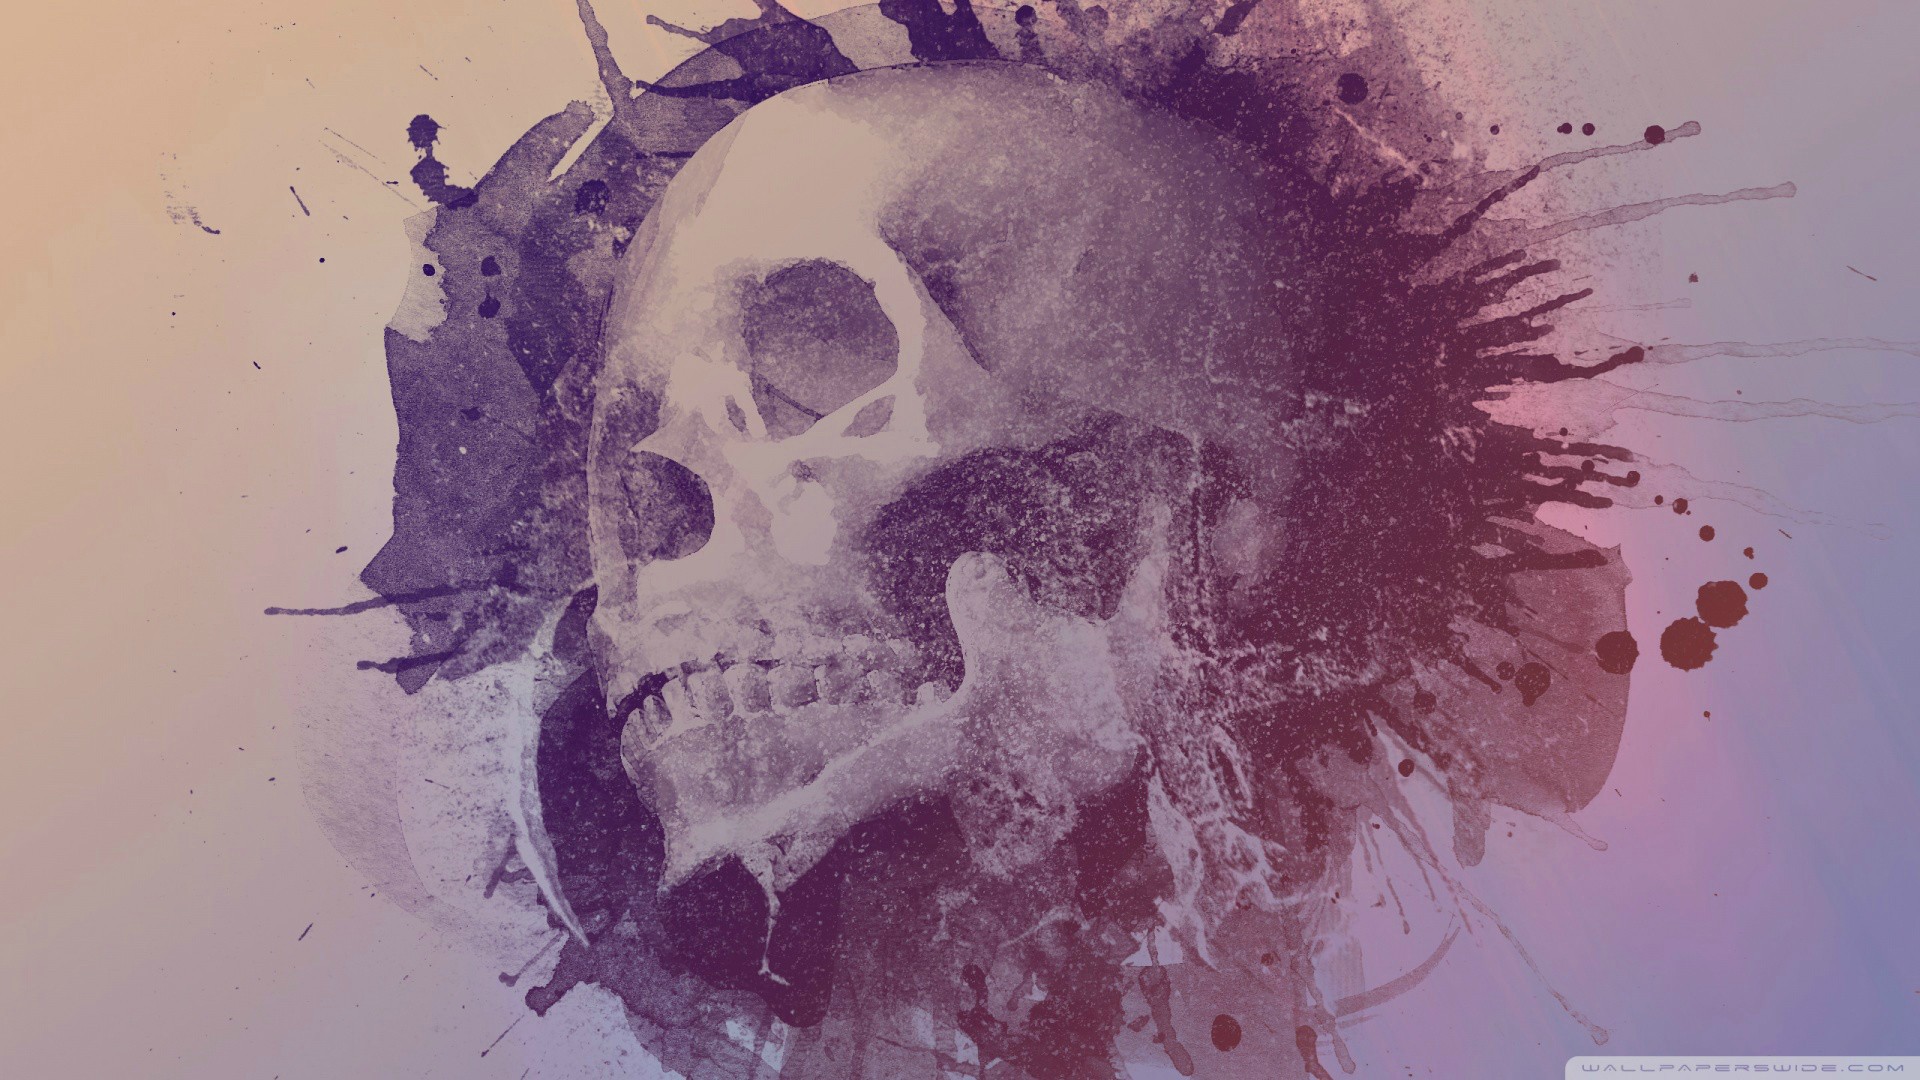 Skull Wallpaper Images - Free Download on Freepik